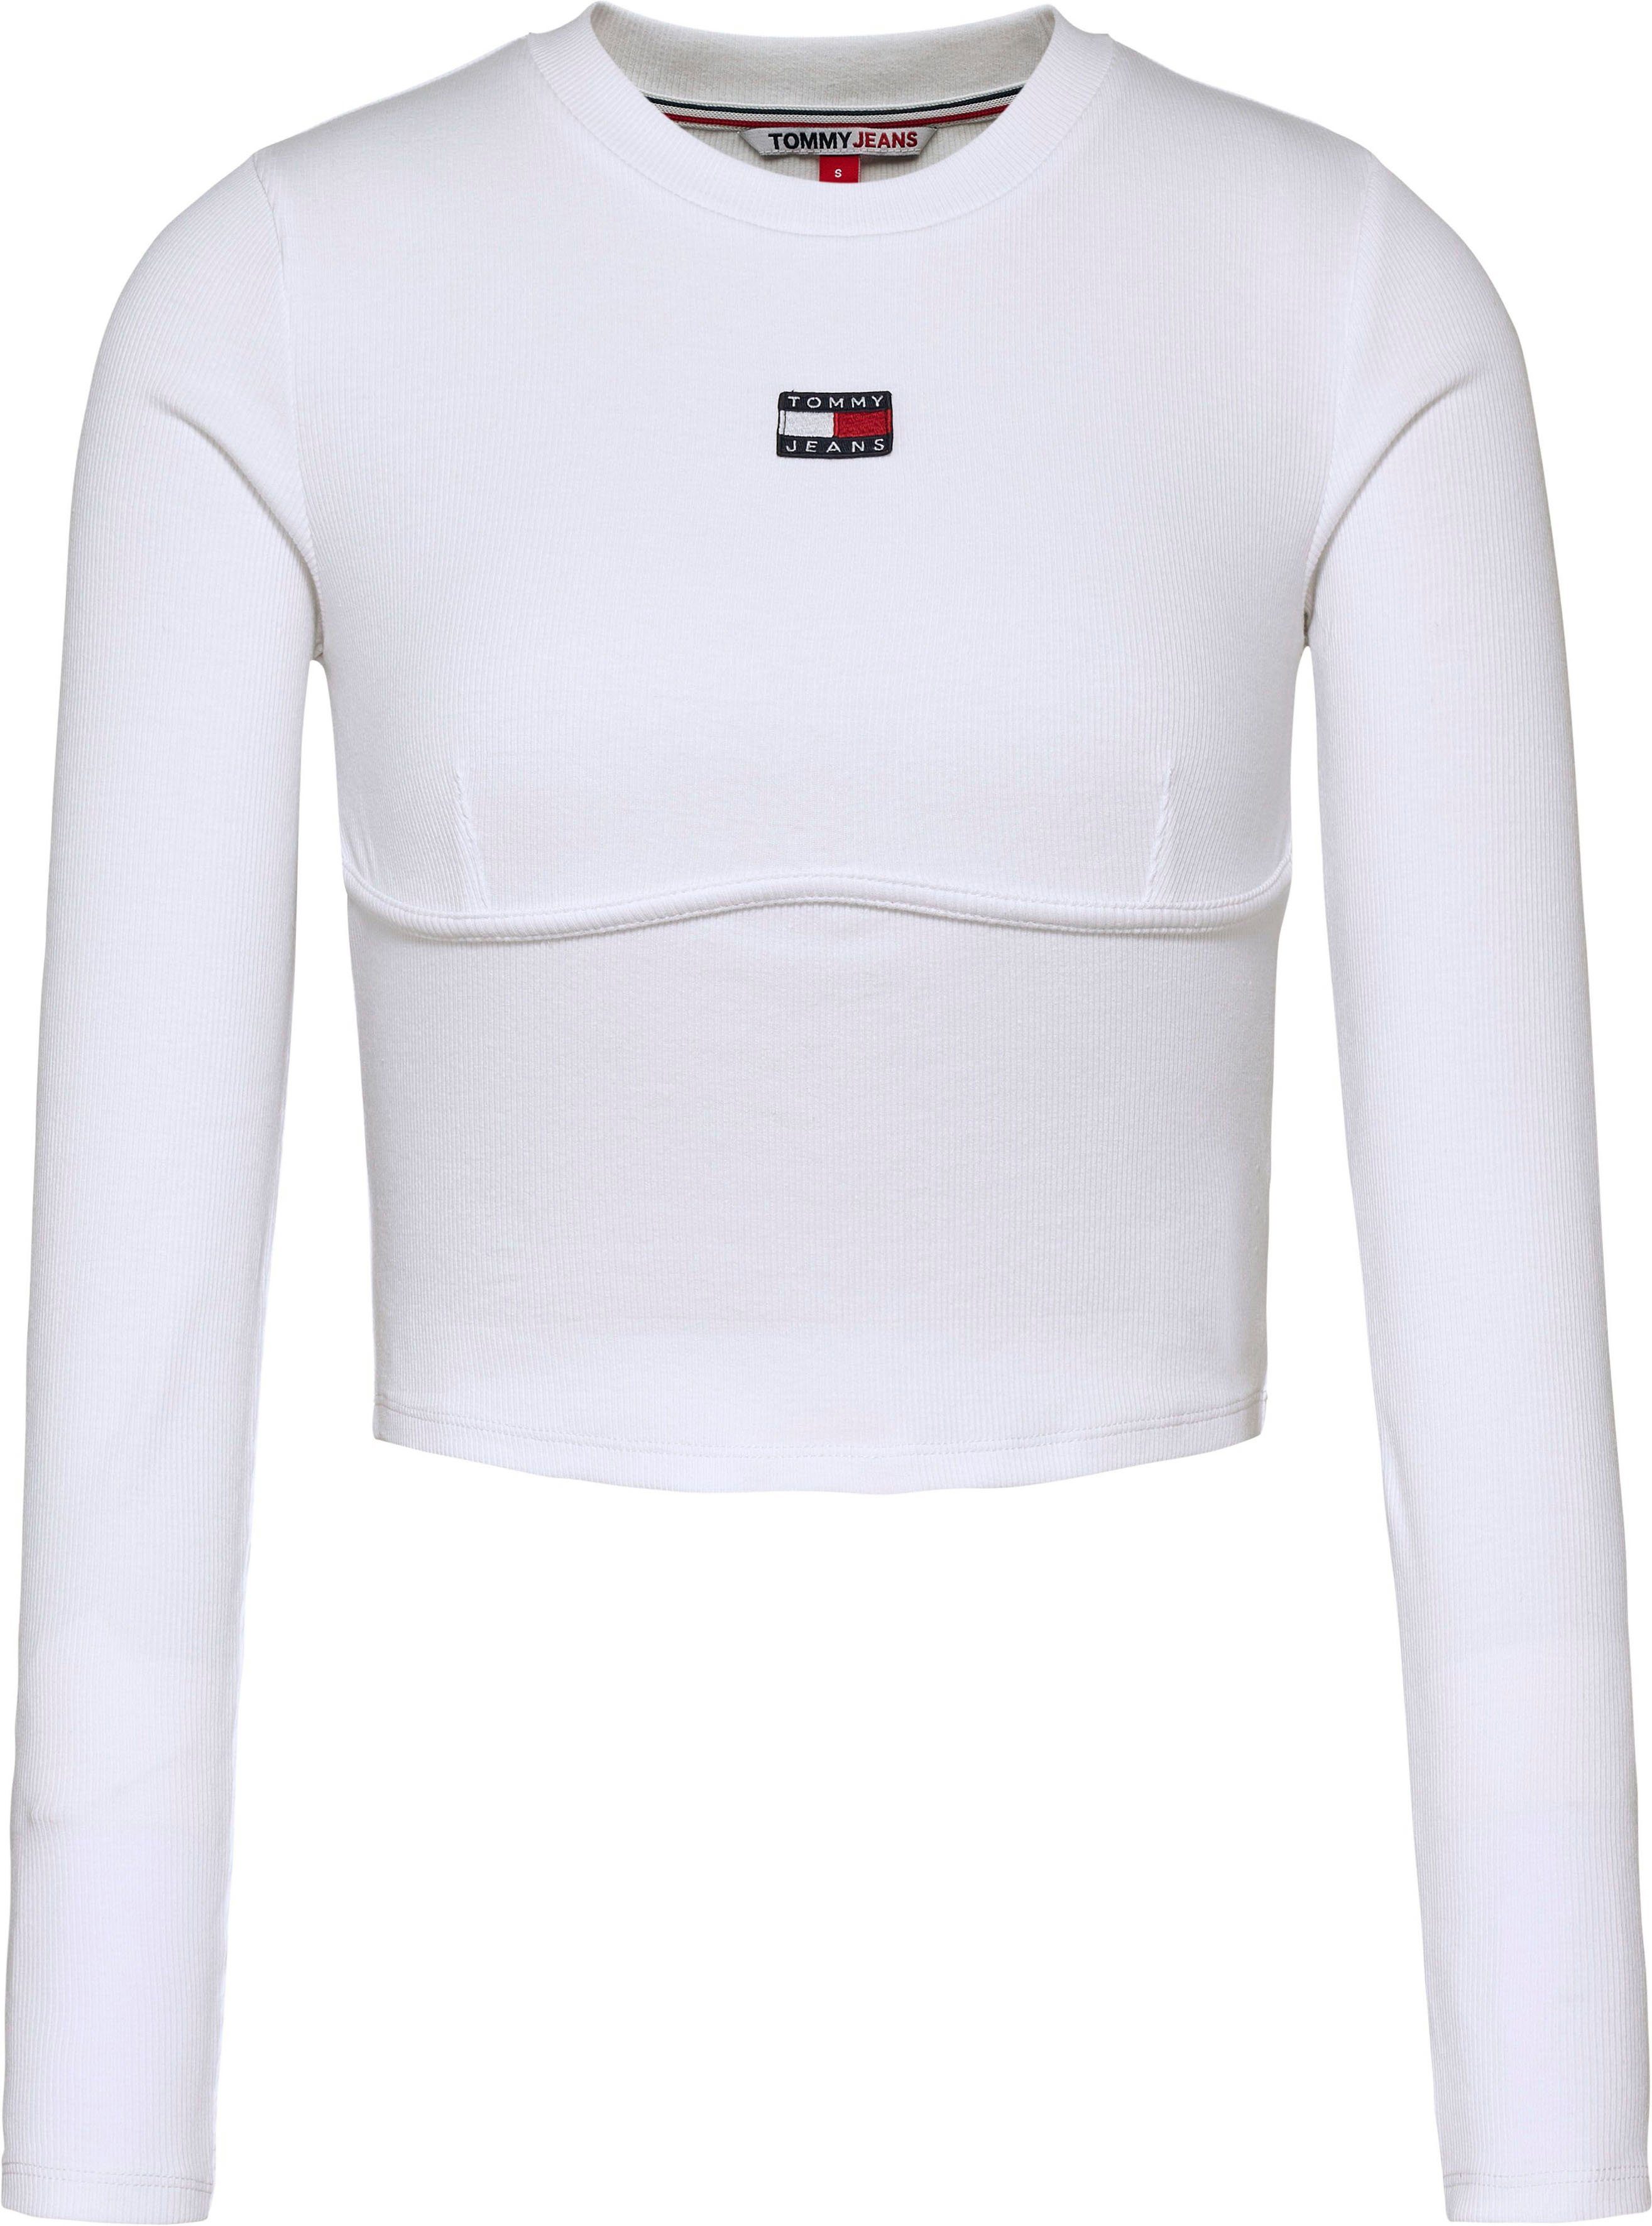 BBY Tommy LS Jeans XS BADGE TJW mit Logo-Badge Rundhalsshirt White